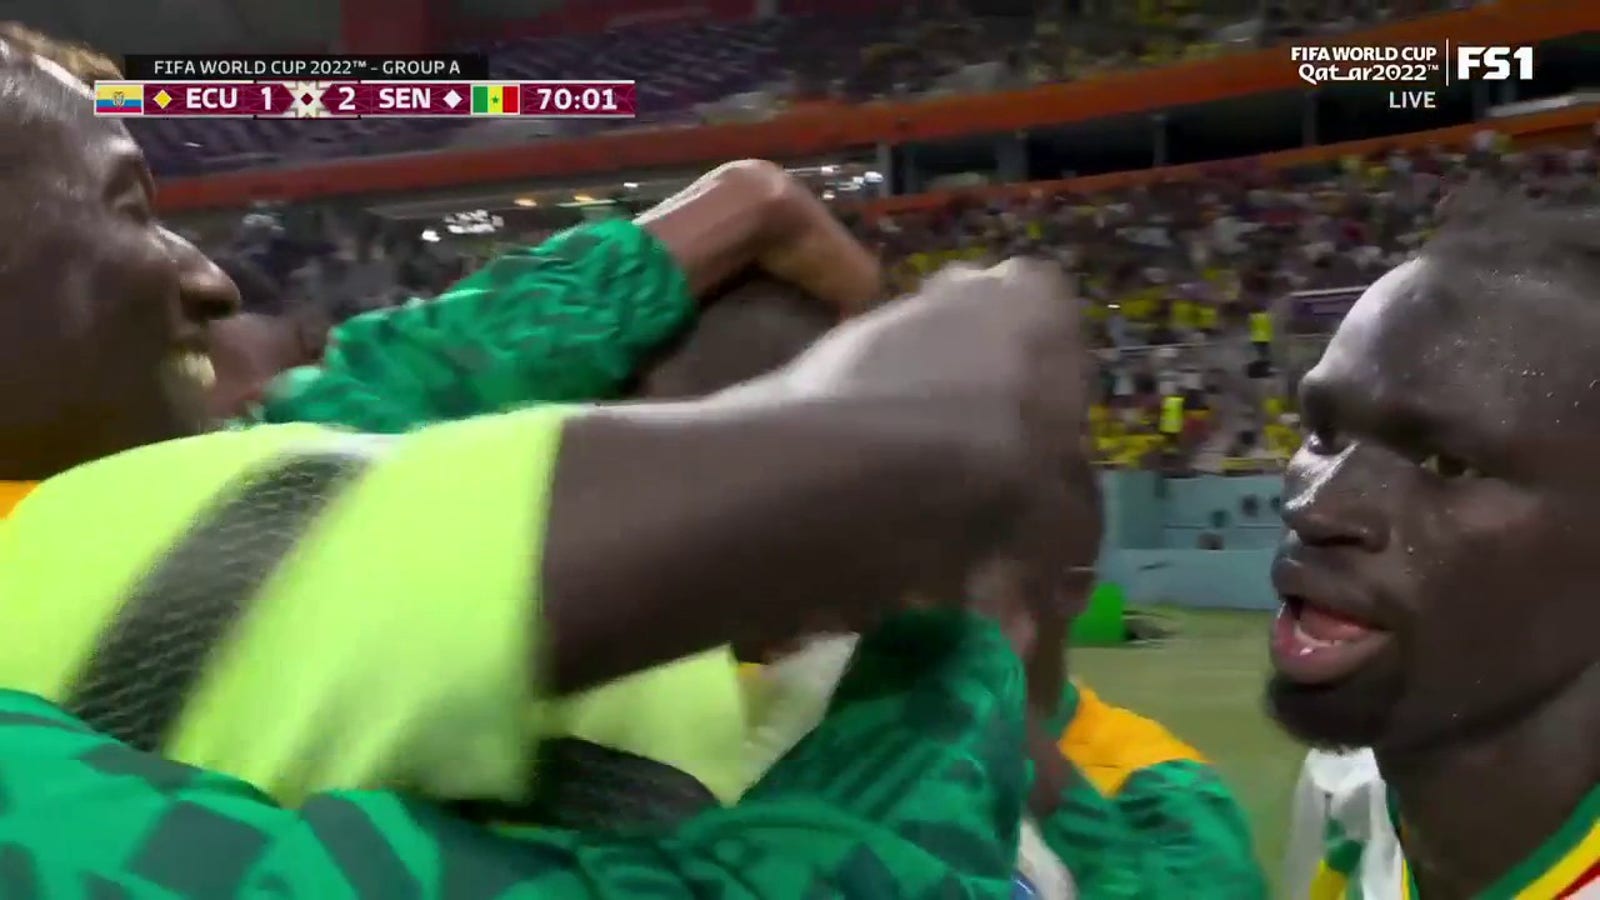 Kalidou Koulibaly of Senegal scores a goal against Ecuador in the 70th minute 